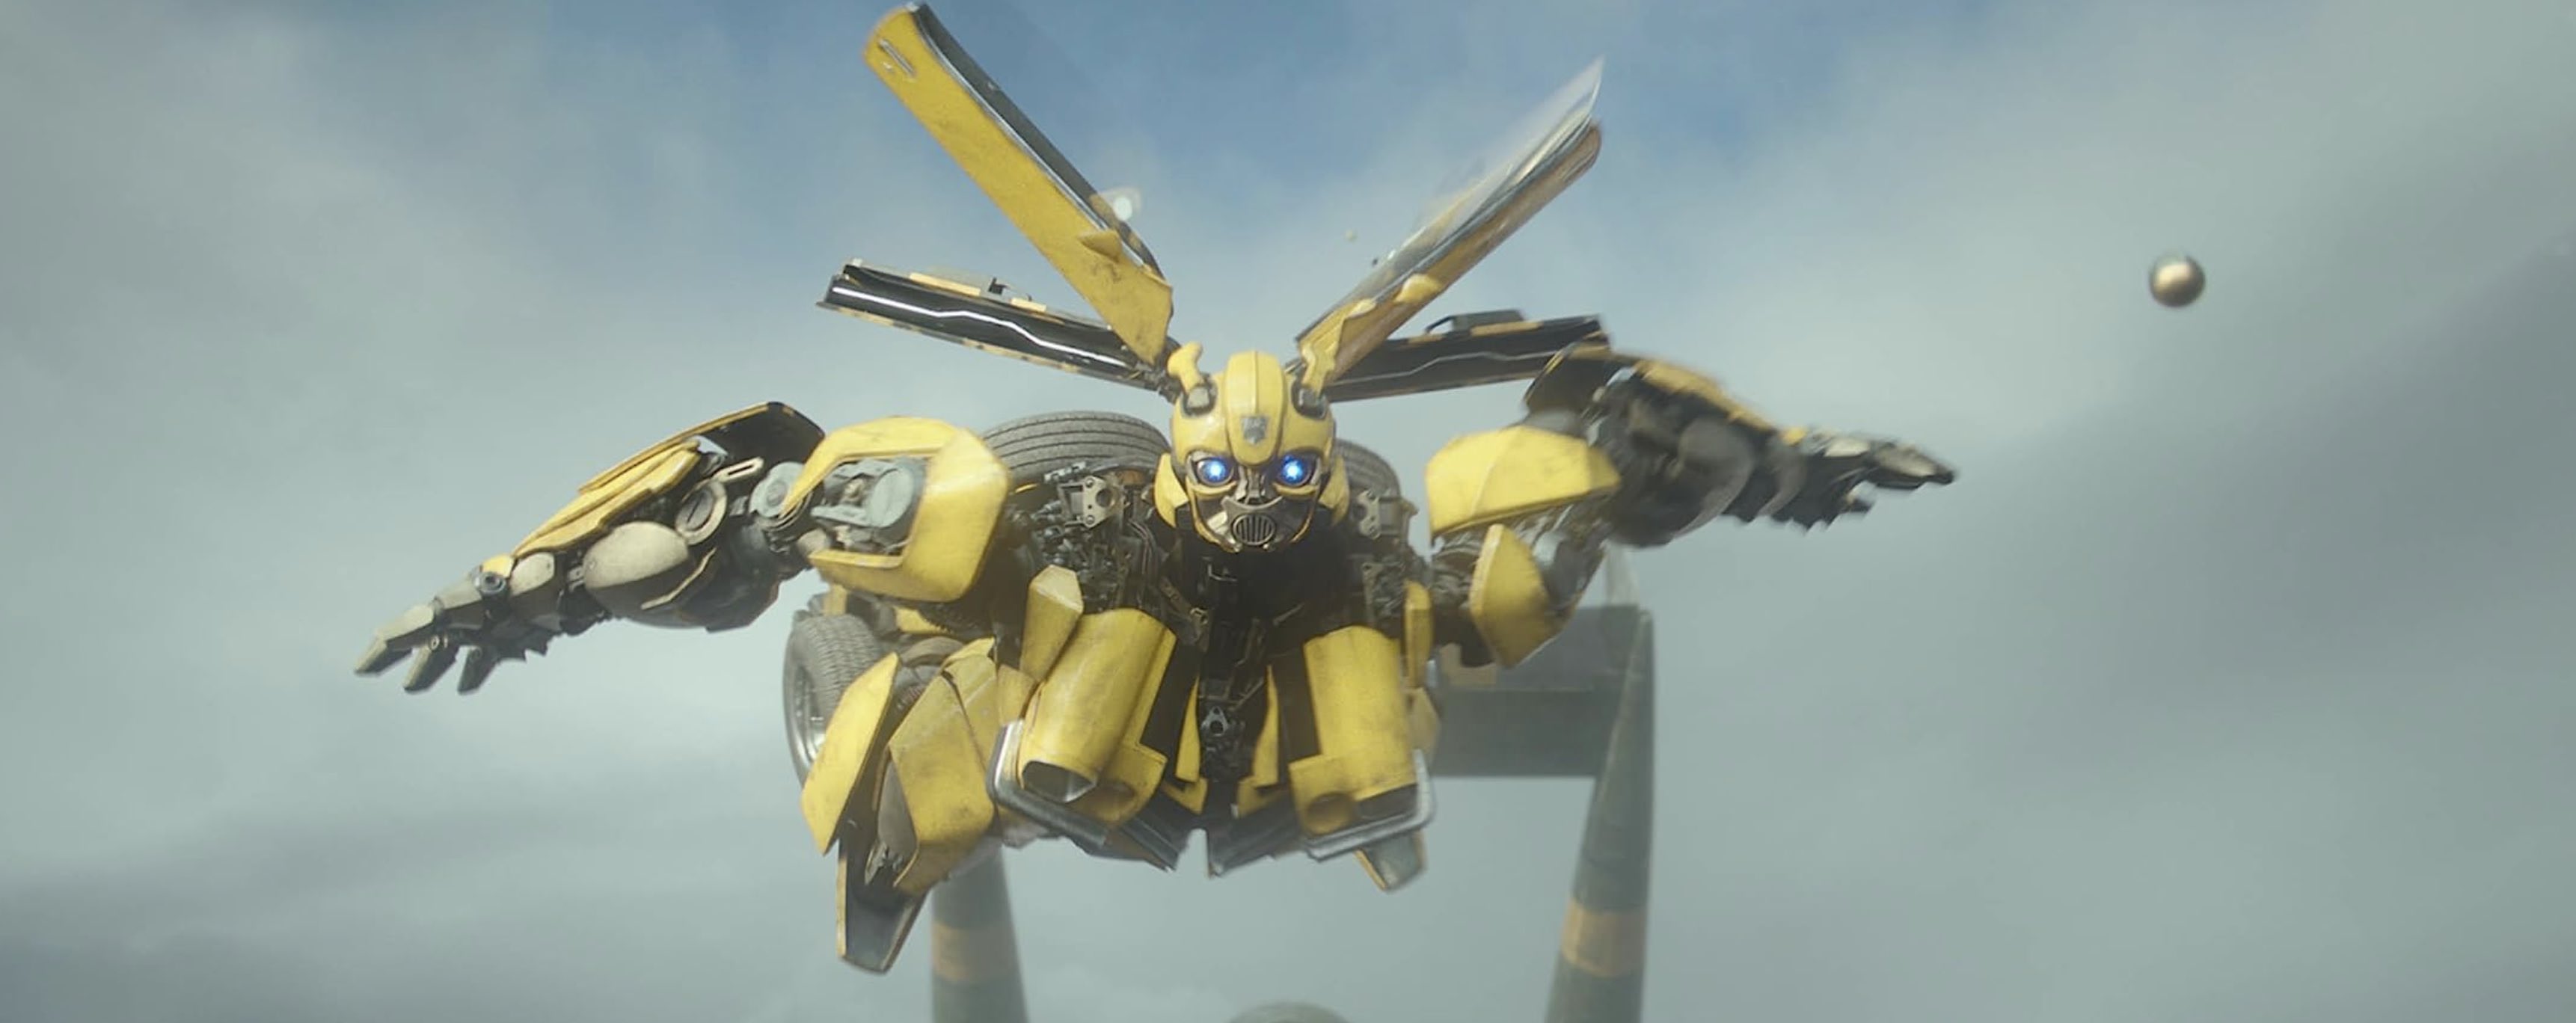 بامبل بی در فیلم Transformers: Rise of the Beasts